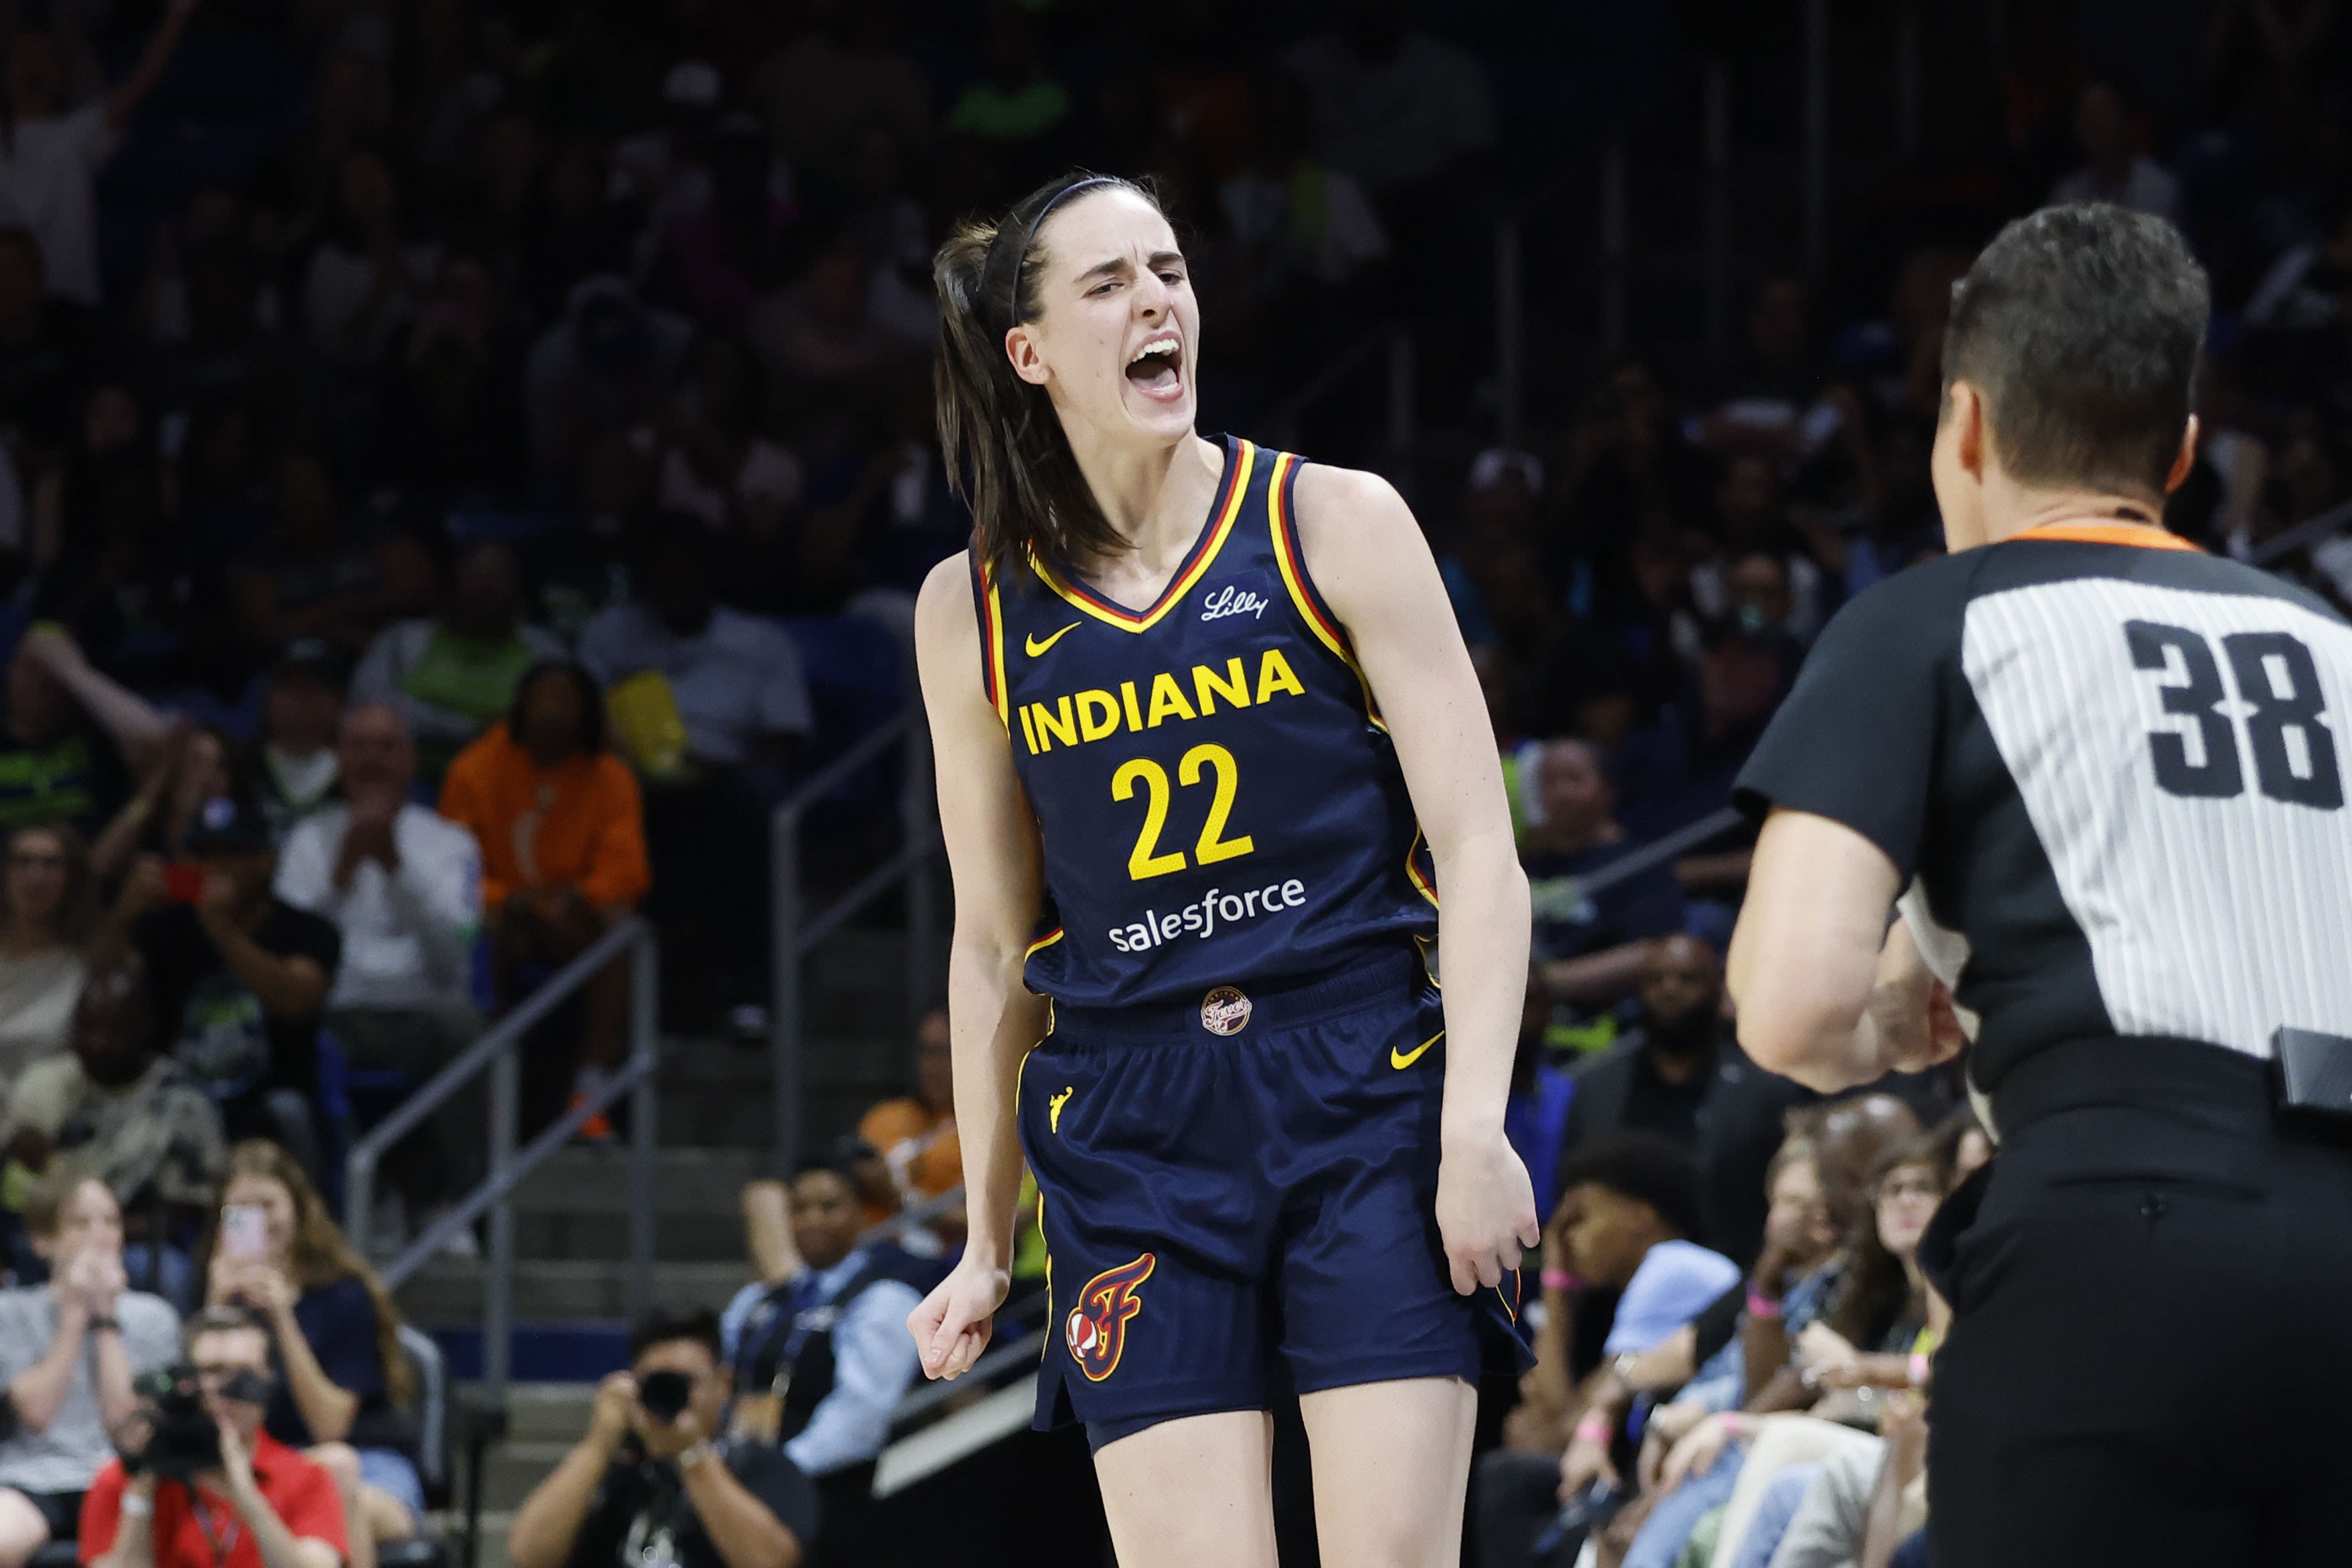 Caitlin Clark WNBA debut: Live updates, highlights as the Indiana Fever superstar plays her first regular season game